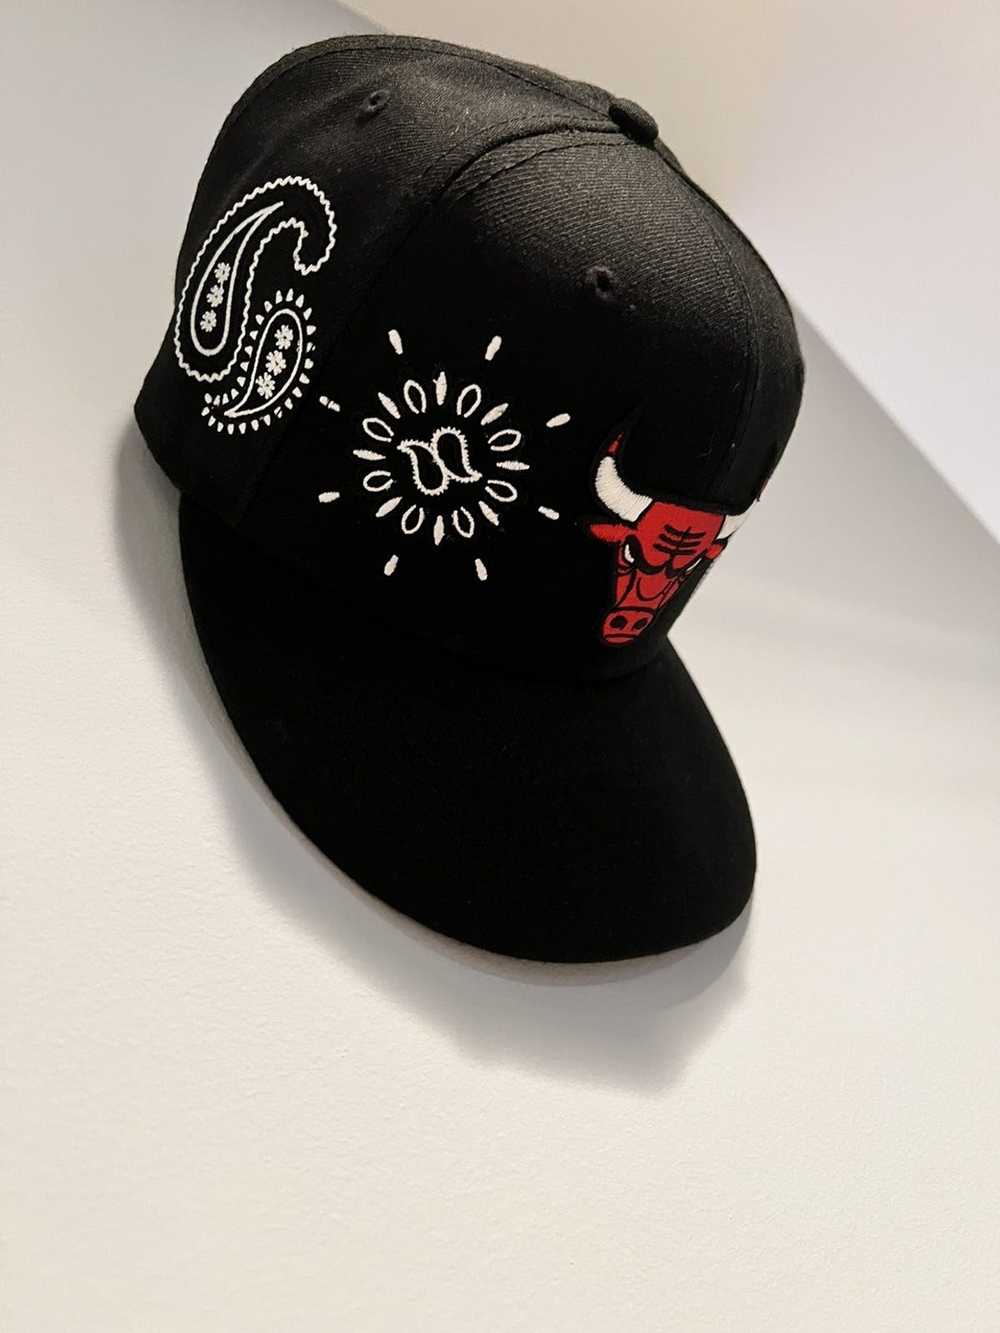 Chicago Bulls × New Era Chicago Bulls Paisley hat - image 2